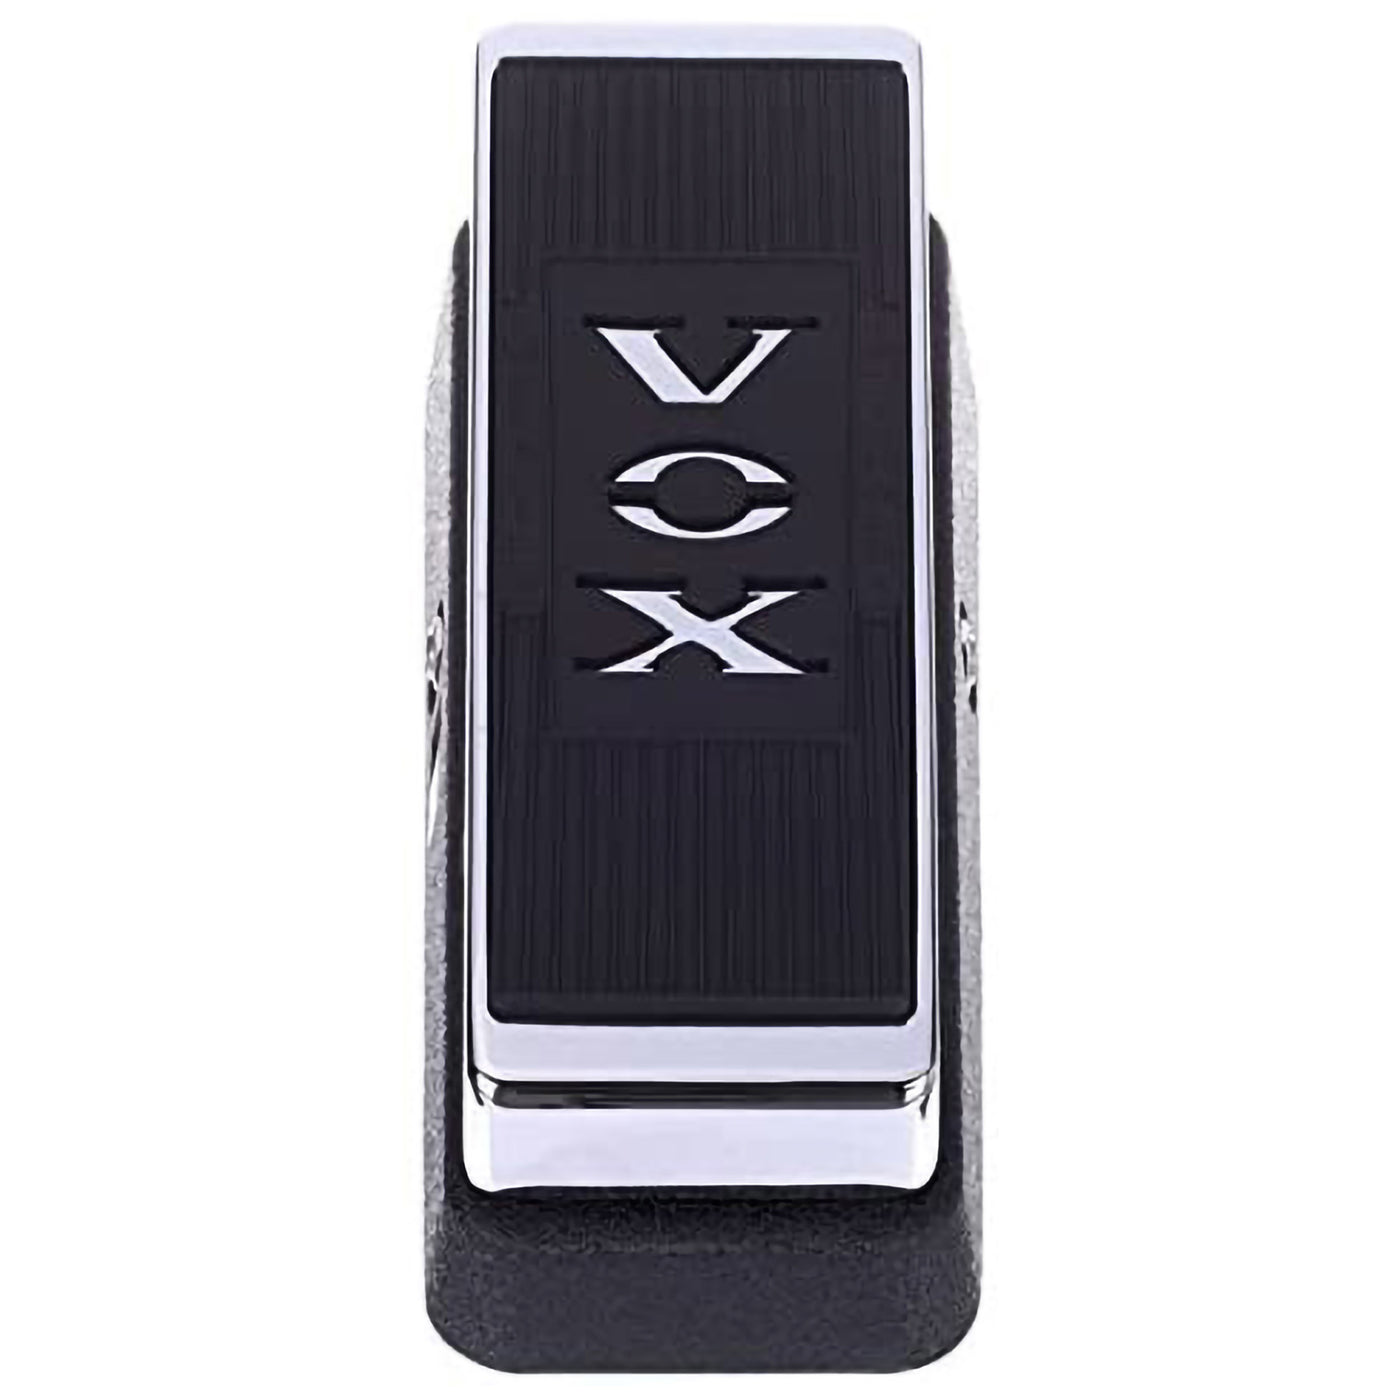 Vox V847-A Classic Guitar Wah Pedal